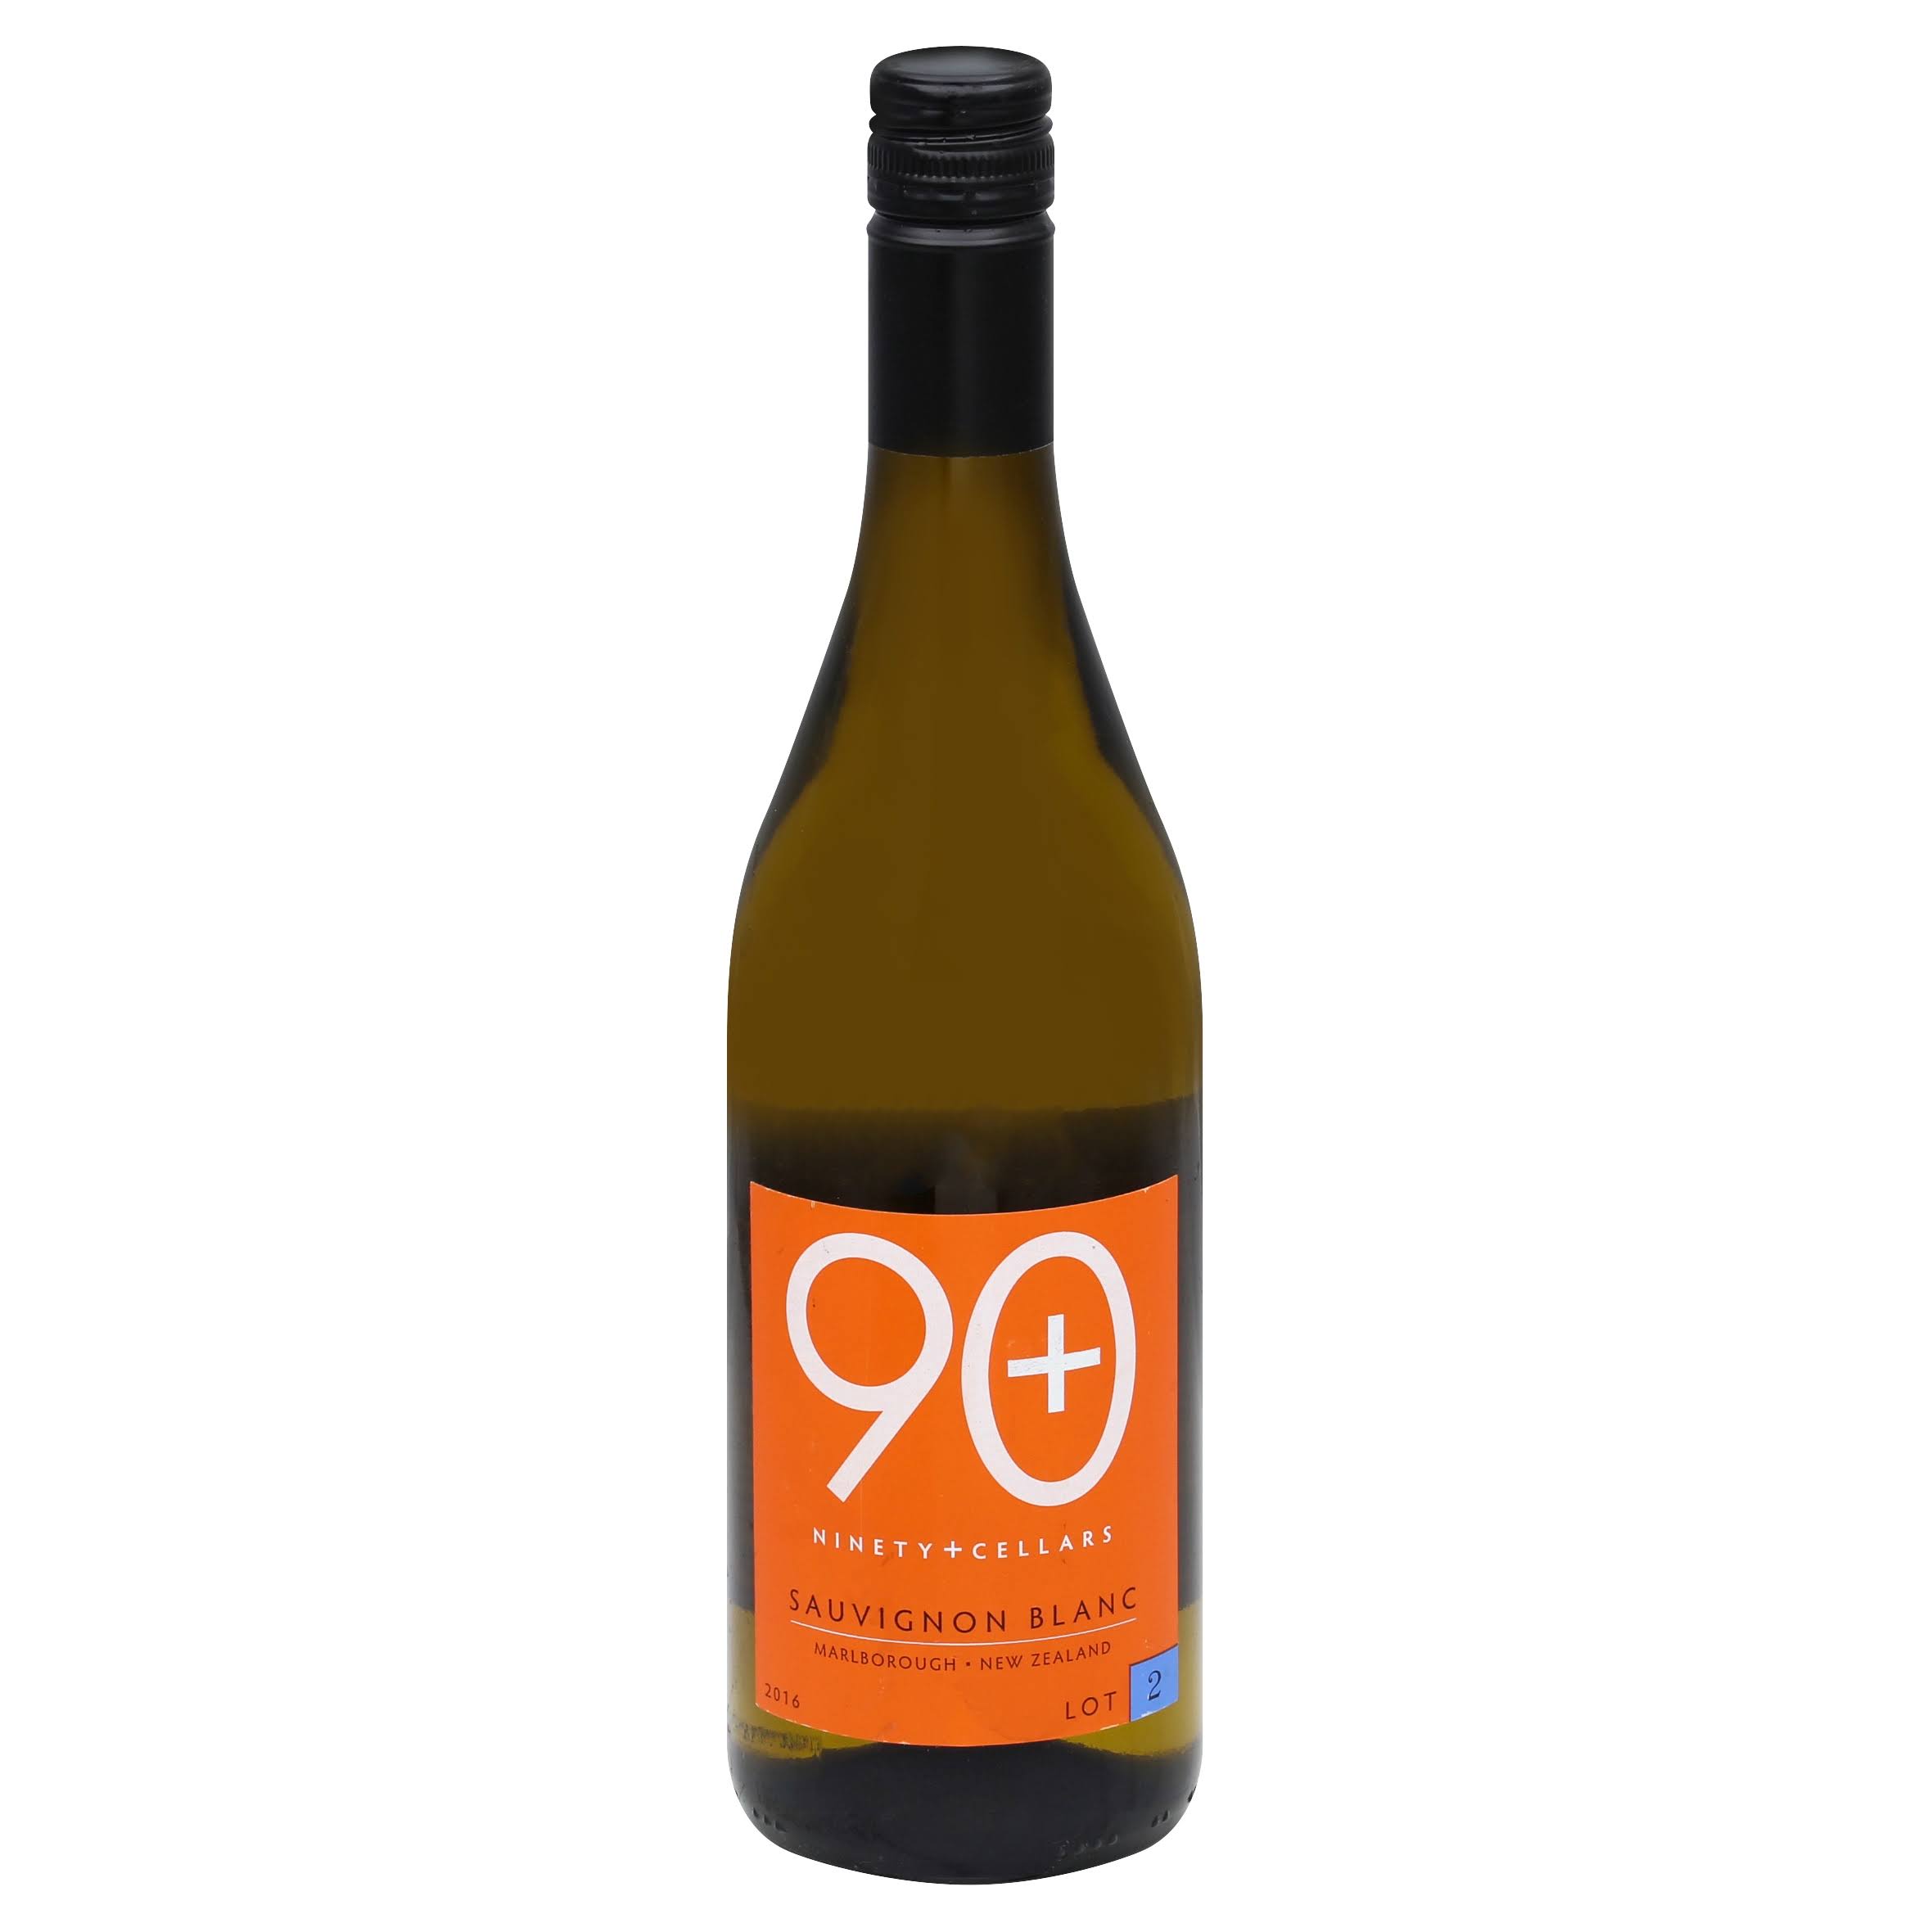 Ninety + Cellars Sauvignon Blanc - 2015